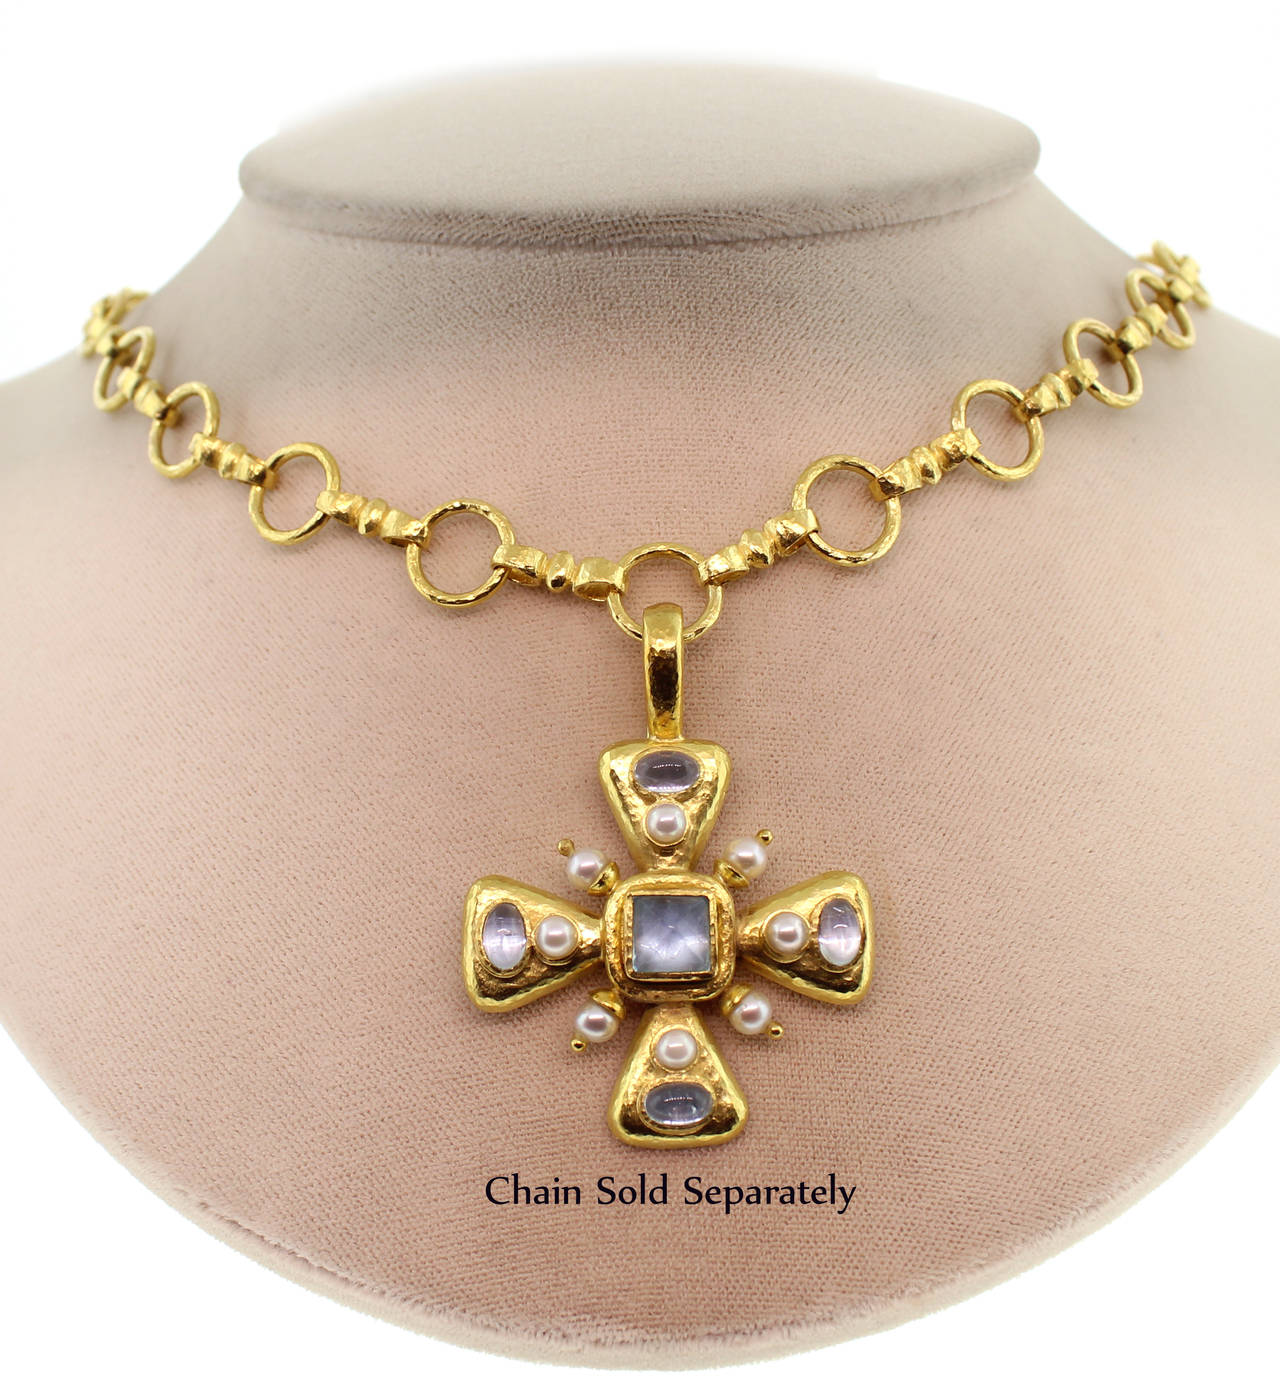 19 karat Aquamarine & Pearl Maltese cross pendant by Elizabeth Locke with 6mm snap bail, 35mm square. Chain sold separately